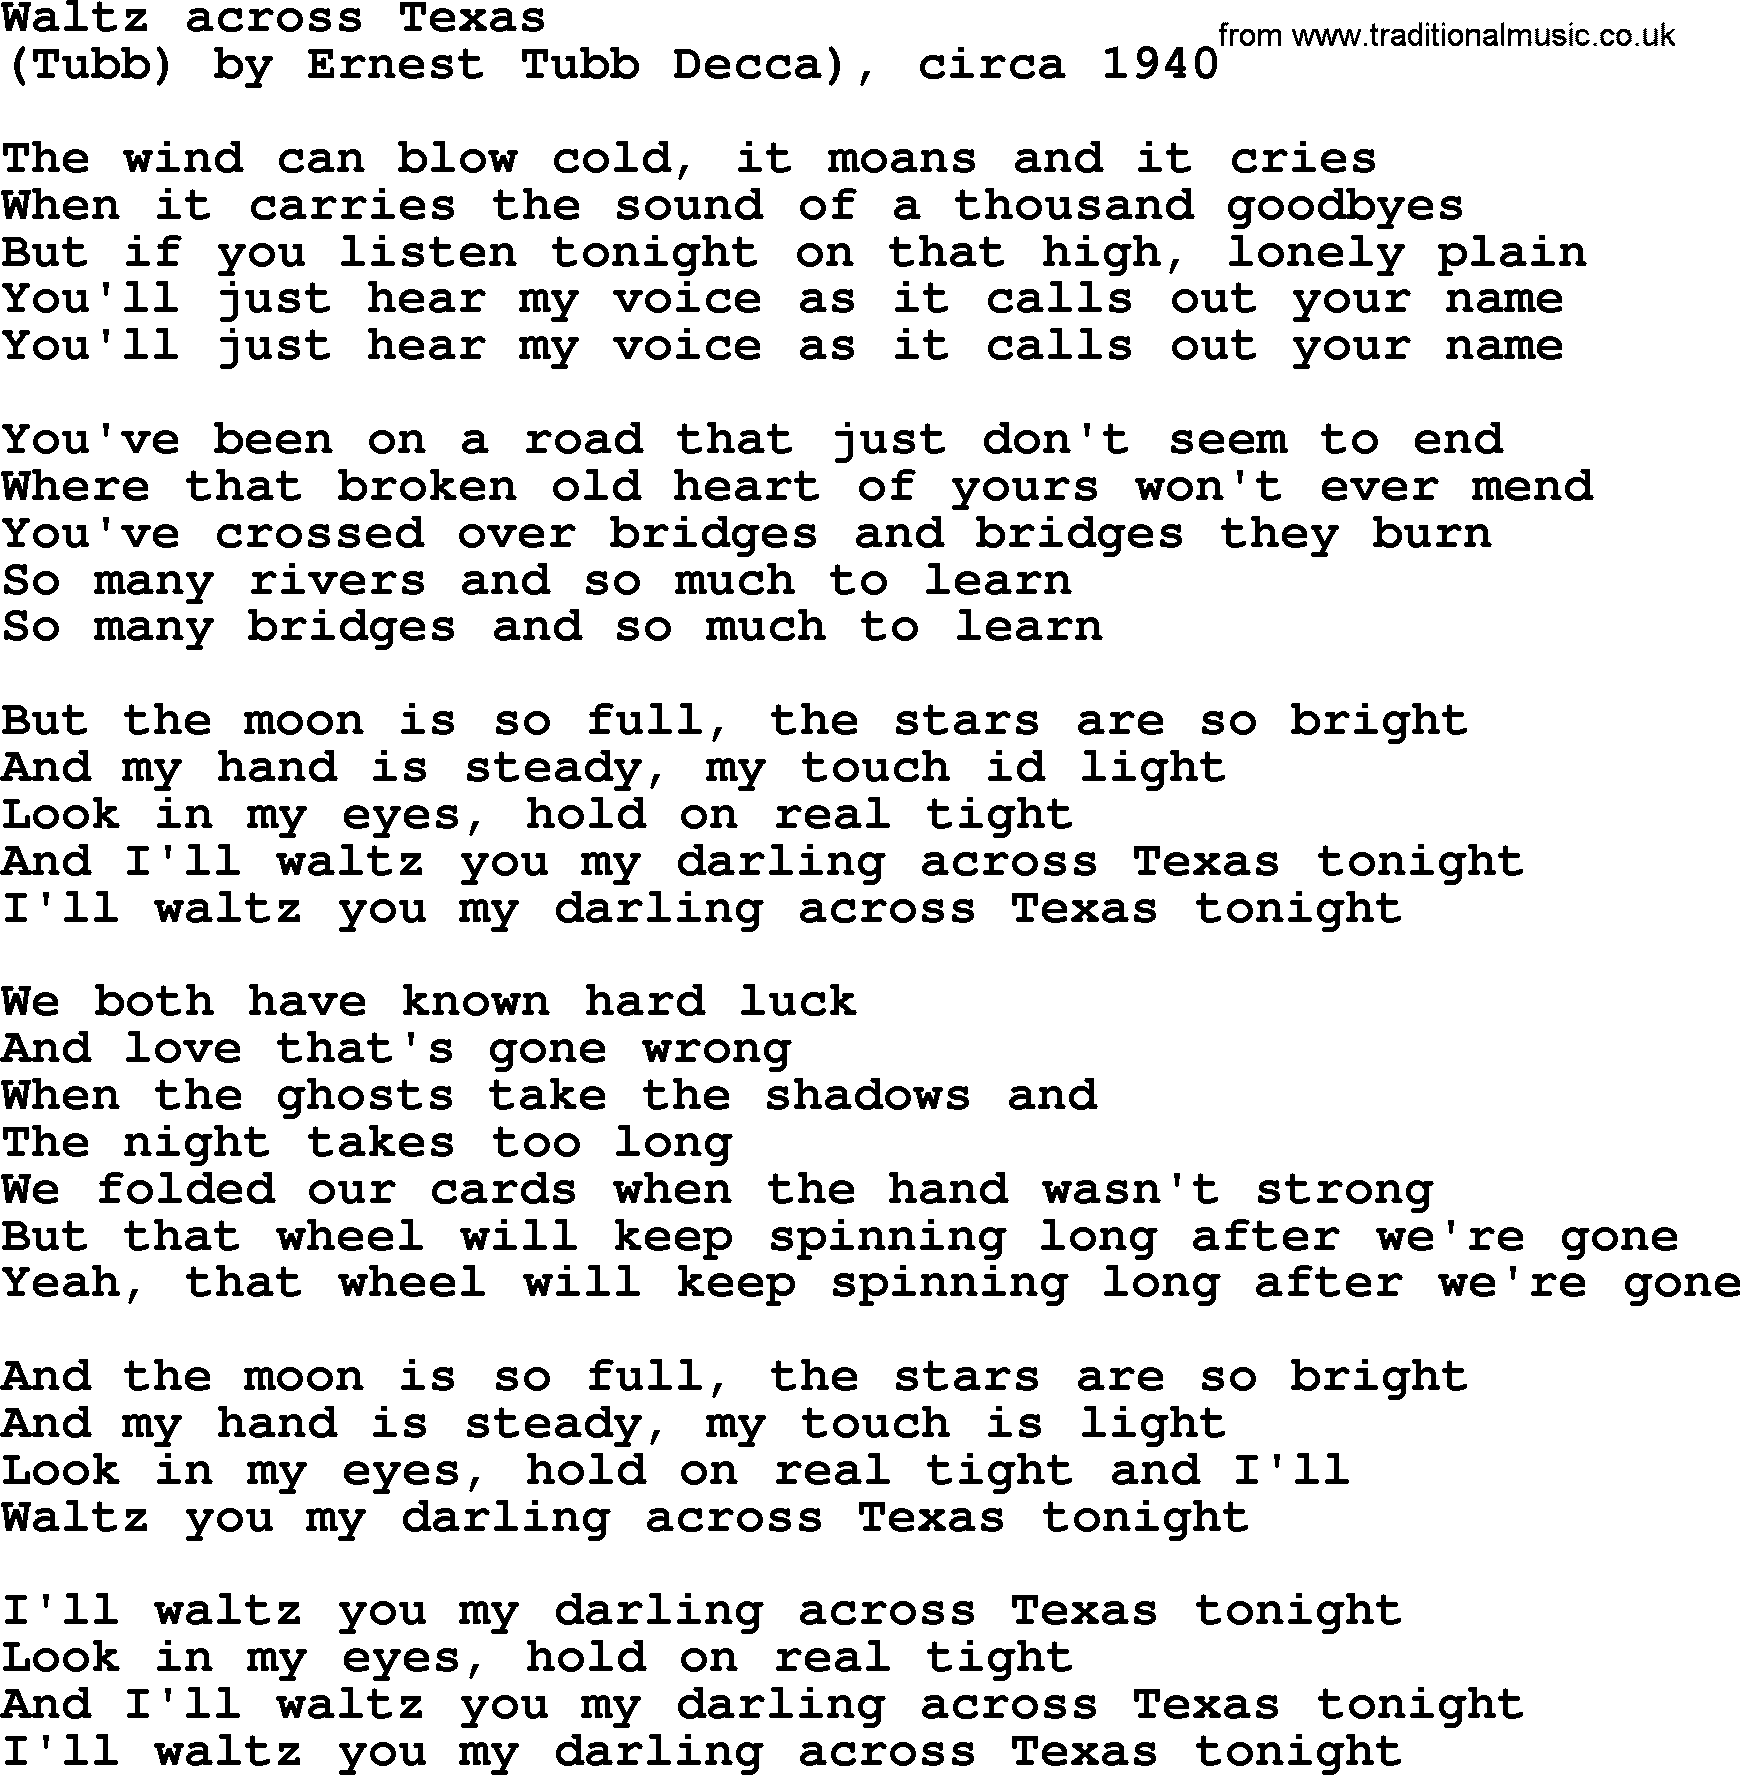 Bruce Springsteen song: Waltz Across Texas lyrics